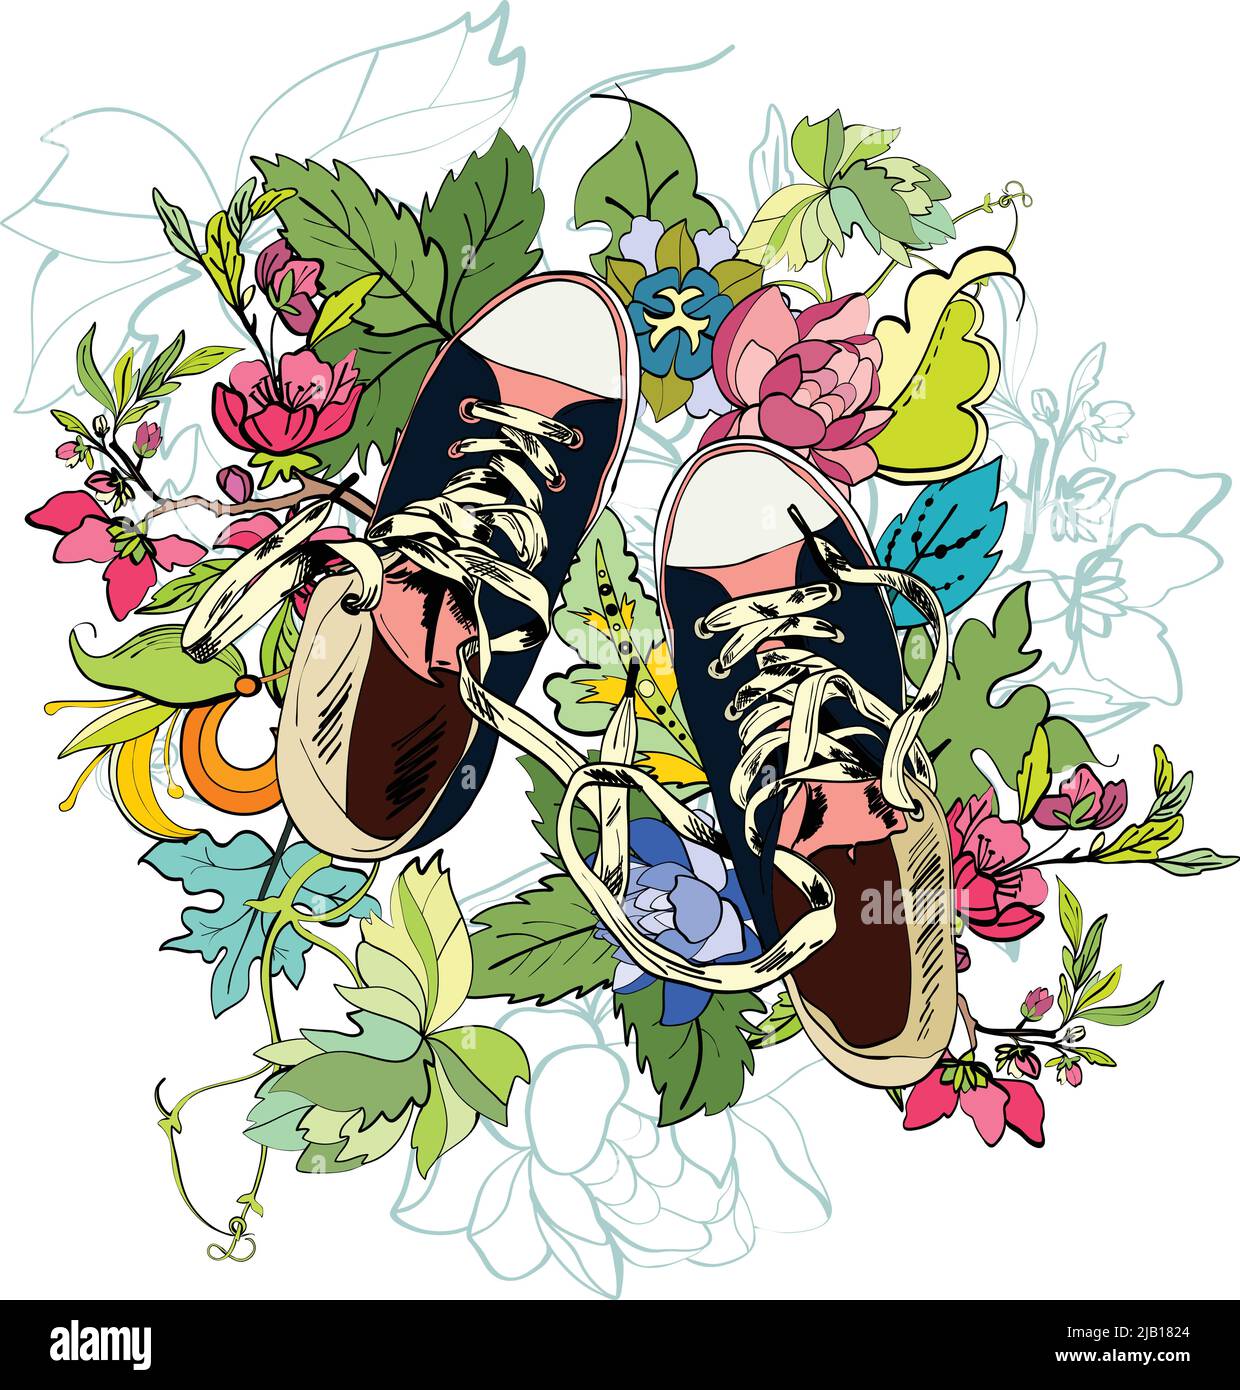 Farbige funky Teenager Gummischuhe mit Blume Hintergrund Vektor-Illustration Stock Vektor